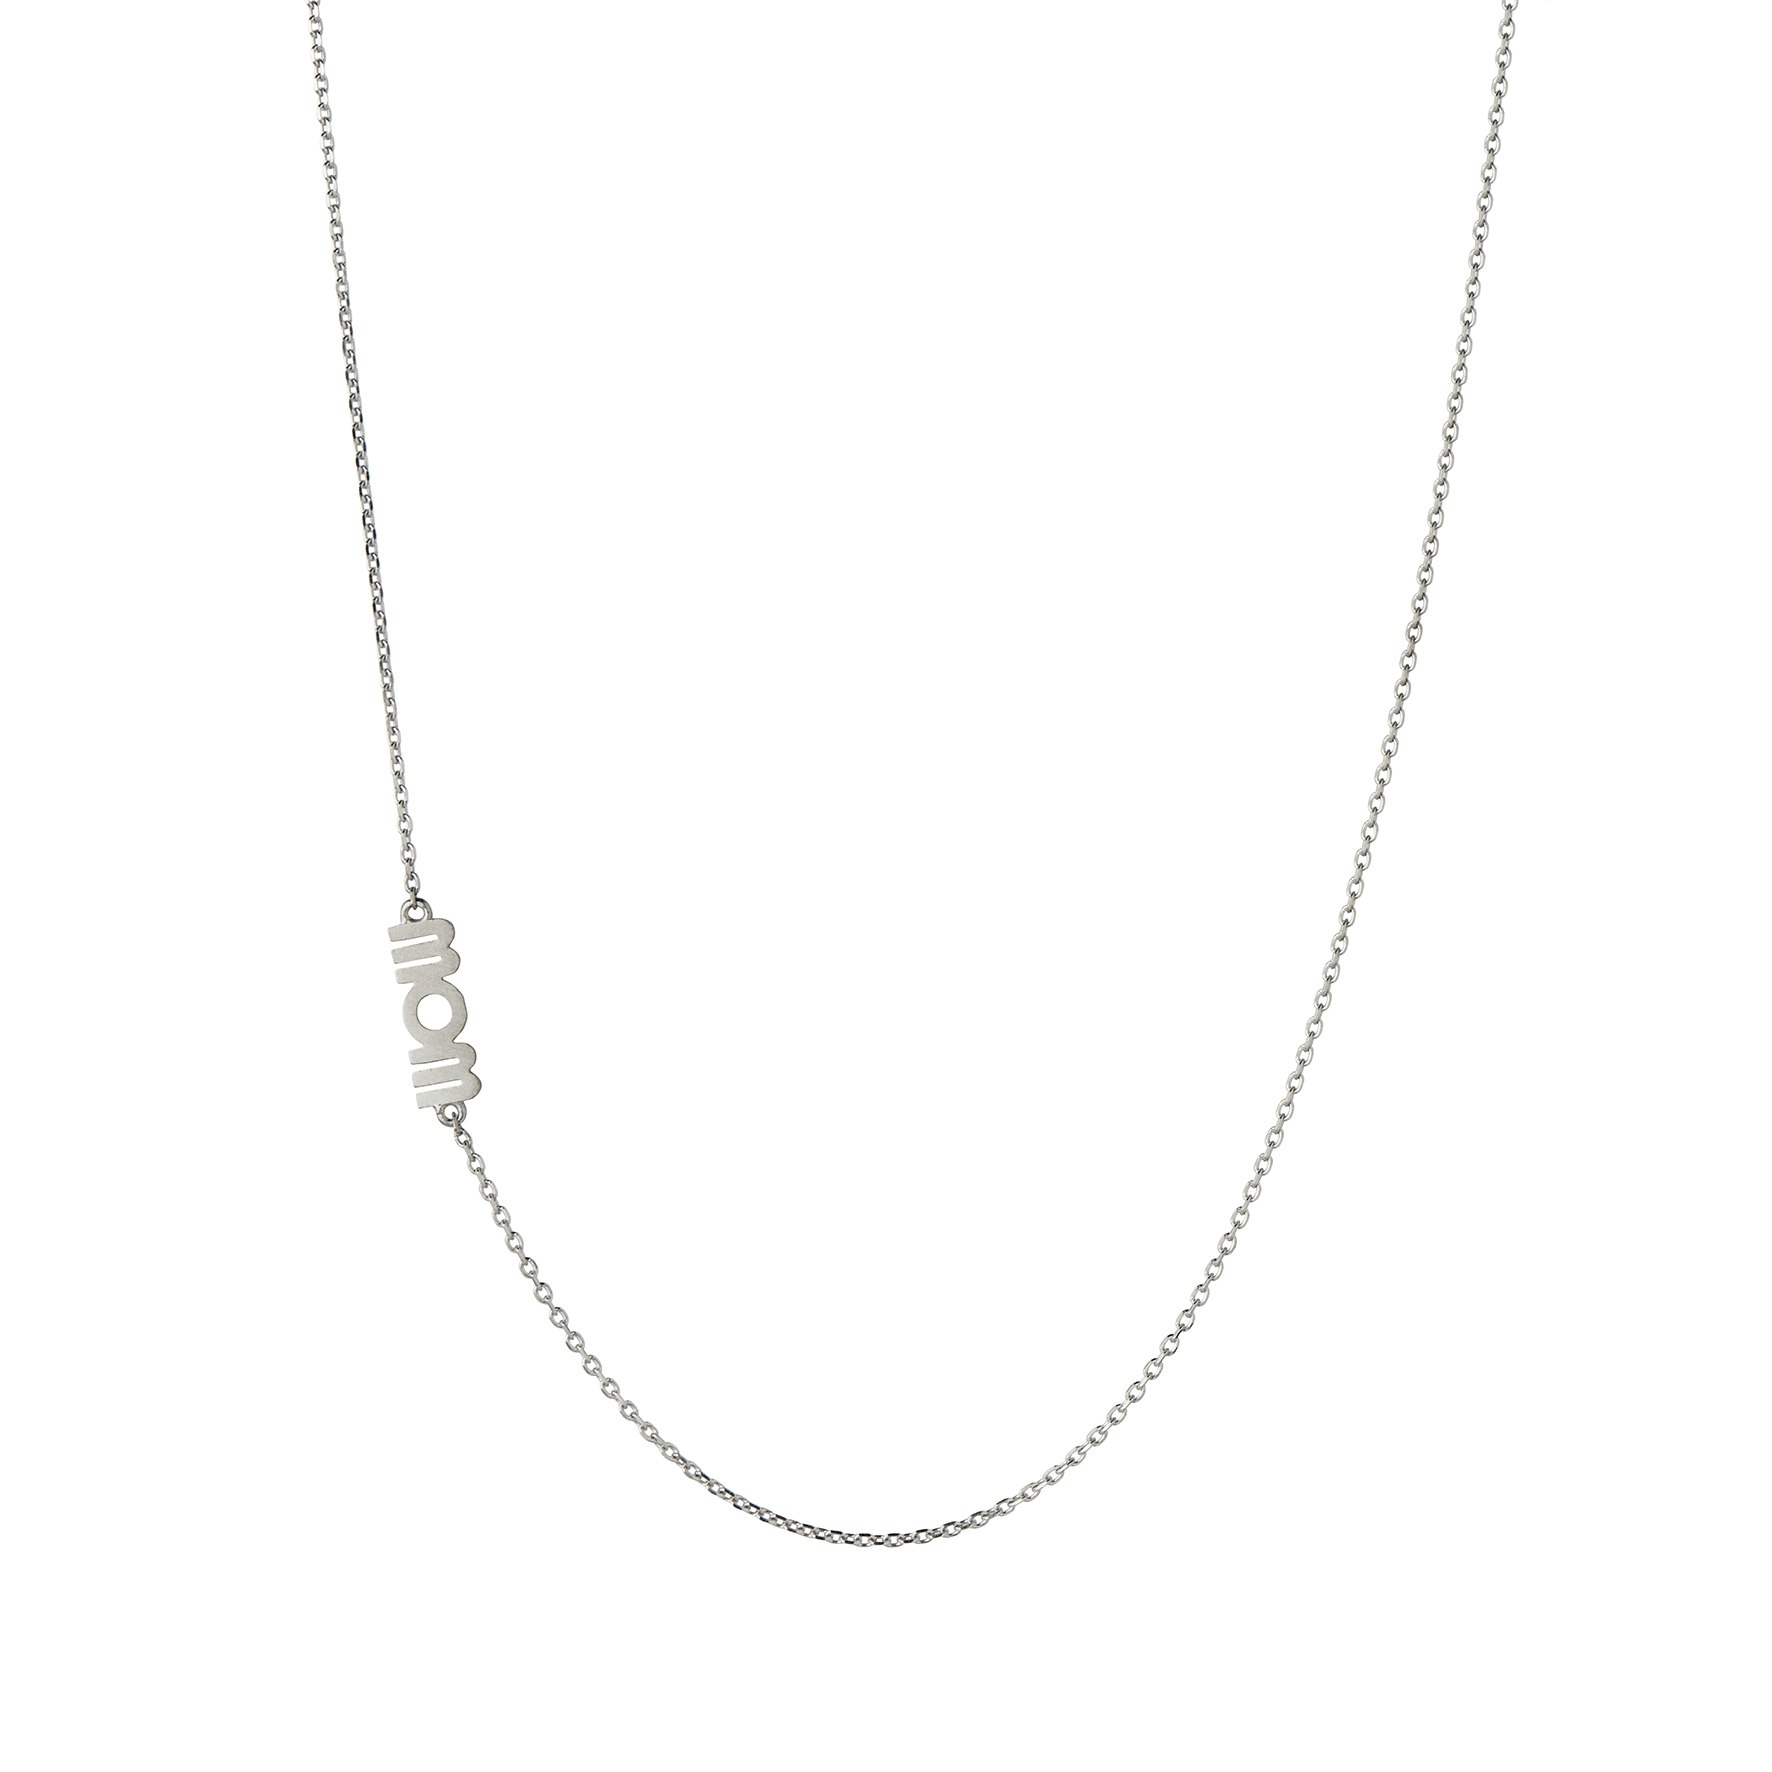 Wow Mom Necklace fra STINE A Jewelry i Sølv Sterling 925